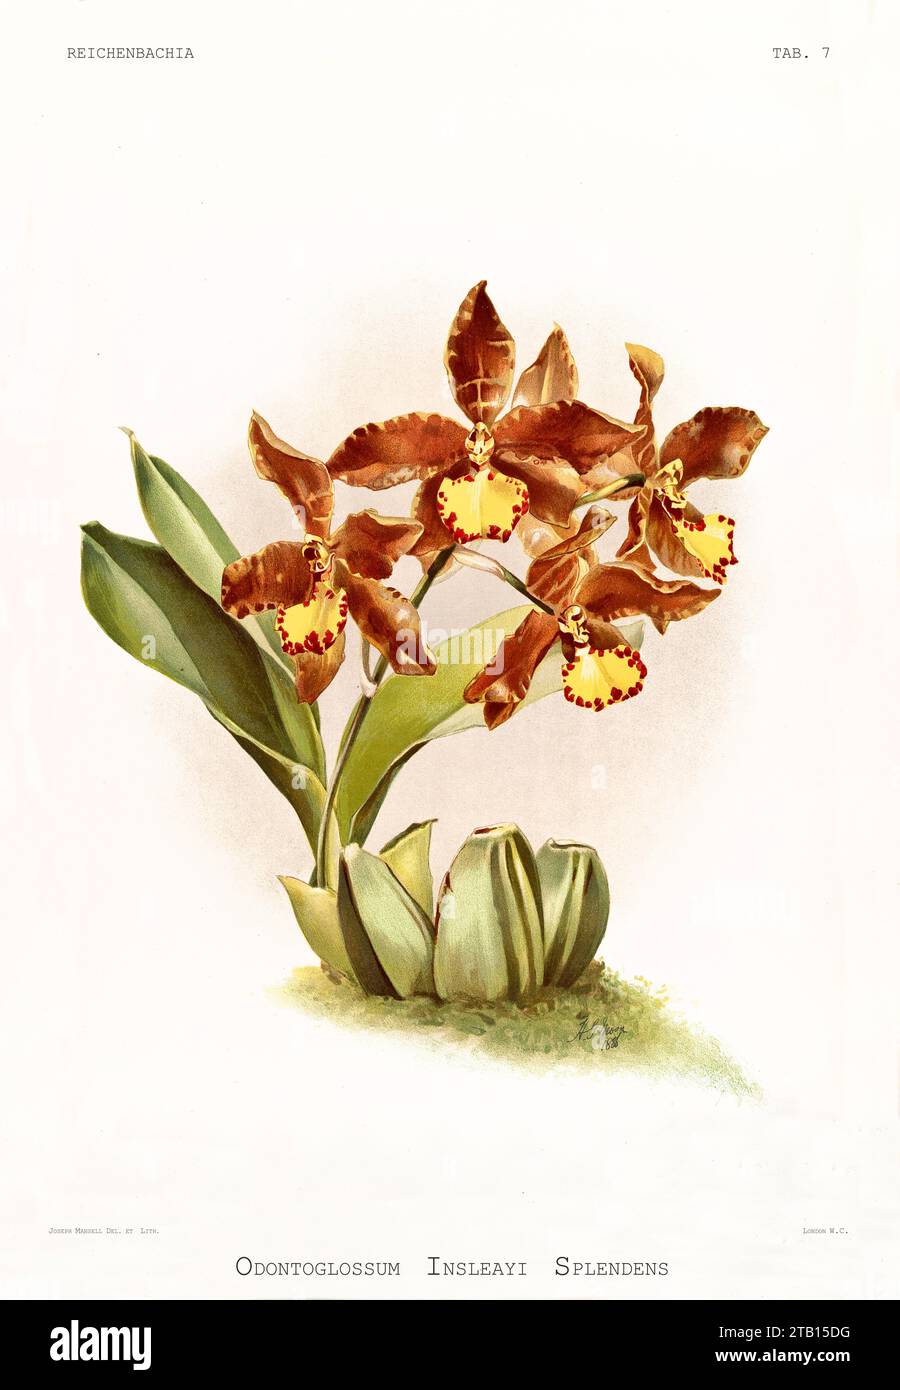 Old illustration of The Splendid Rossioglossum (Rossioglossum splendens). Reichenbachia, by F. Sander. St. Albans, UK, 1888 - 1894 Stock Photo